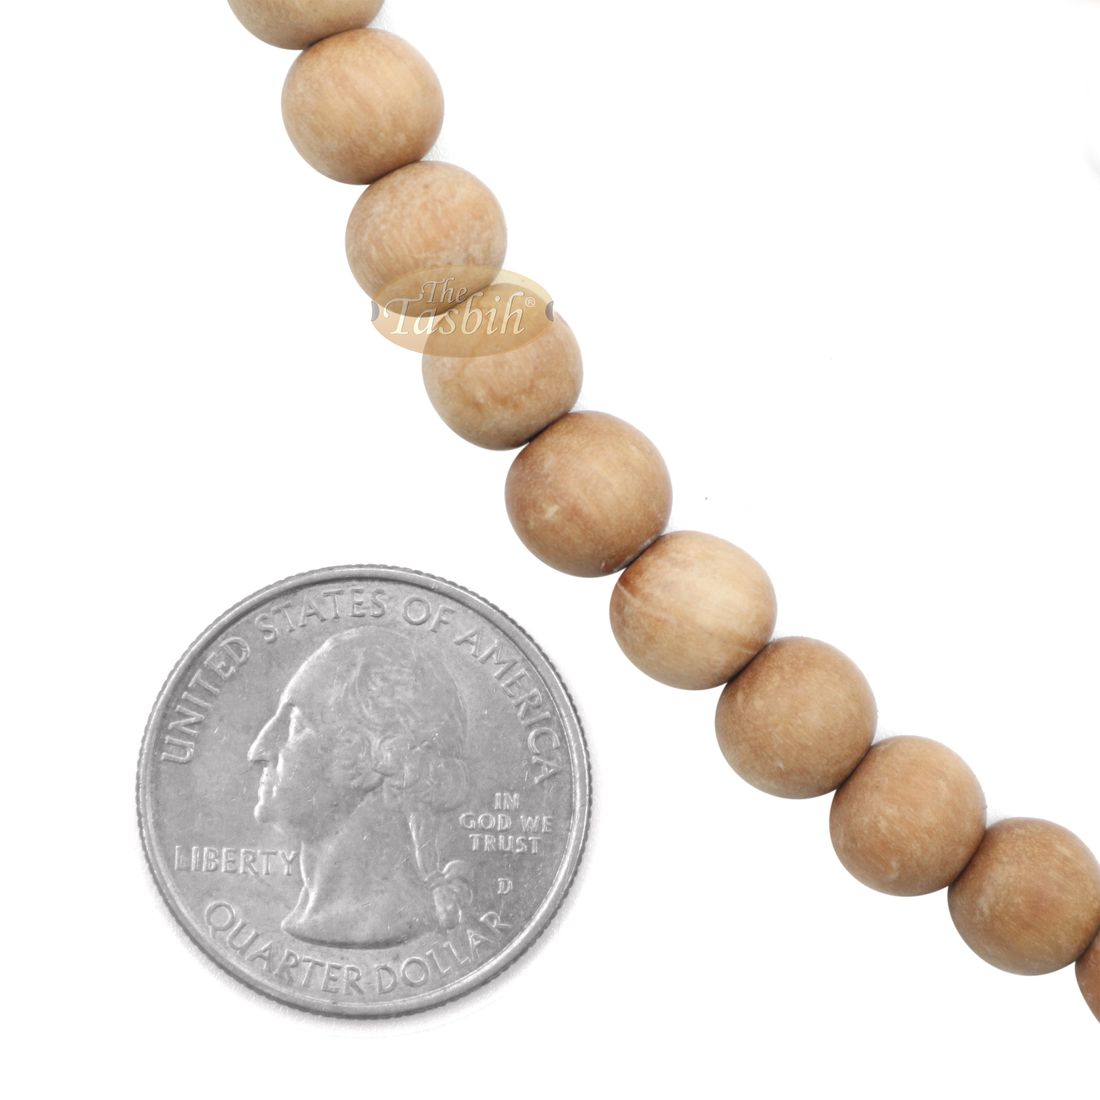 Sandalwood Prayer beads 99ct 8mm-bead Scented Tasbih with Black Tassels